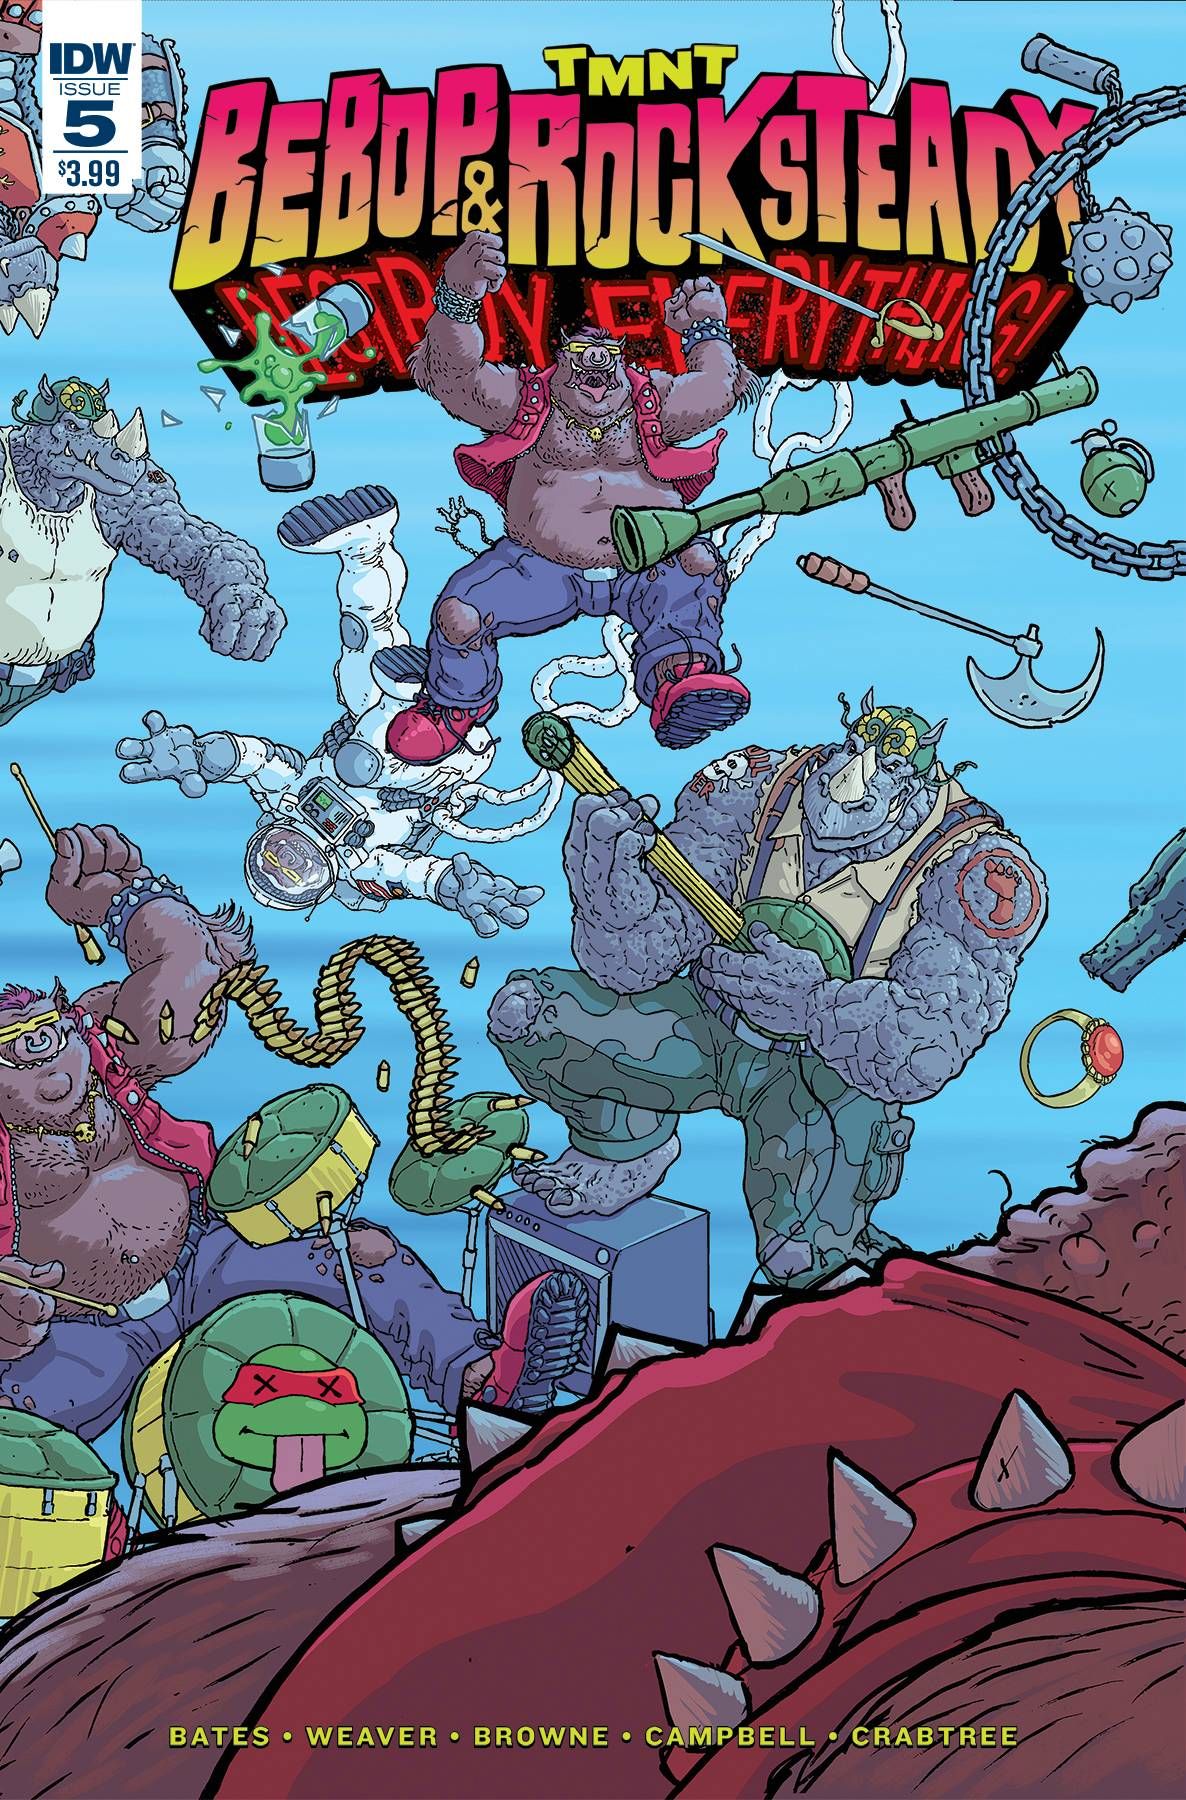 Teenage Mutant Ninja Turtles: Bebop & Rocksteady Destroy Everything #5 Comic